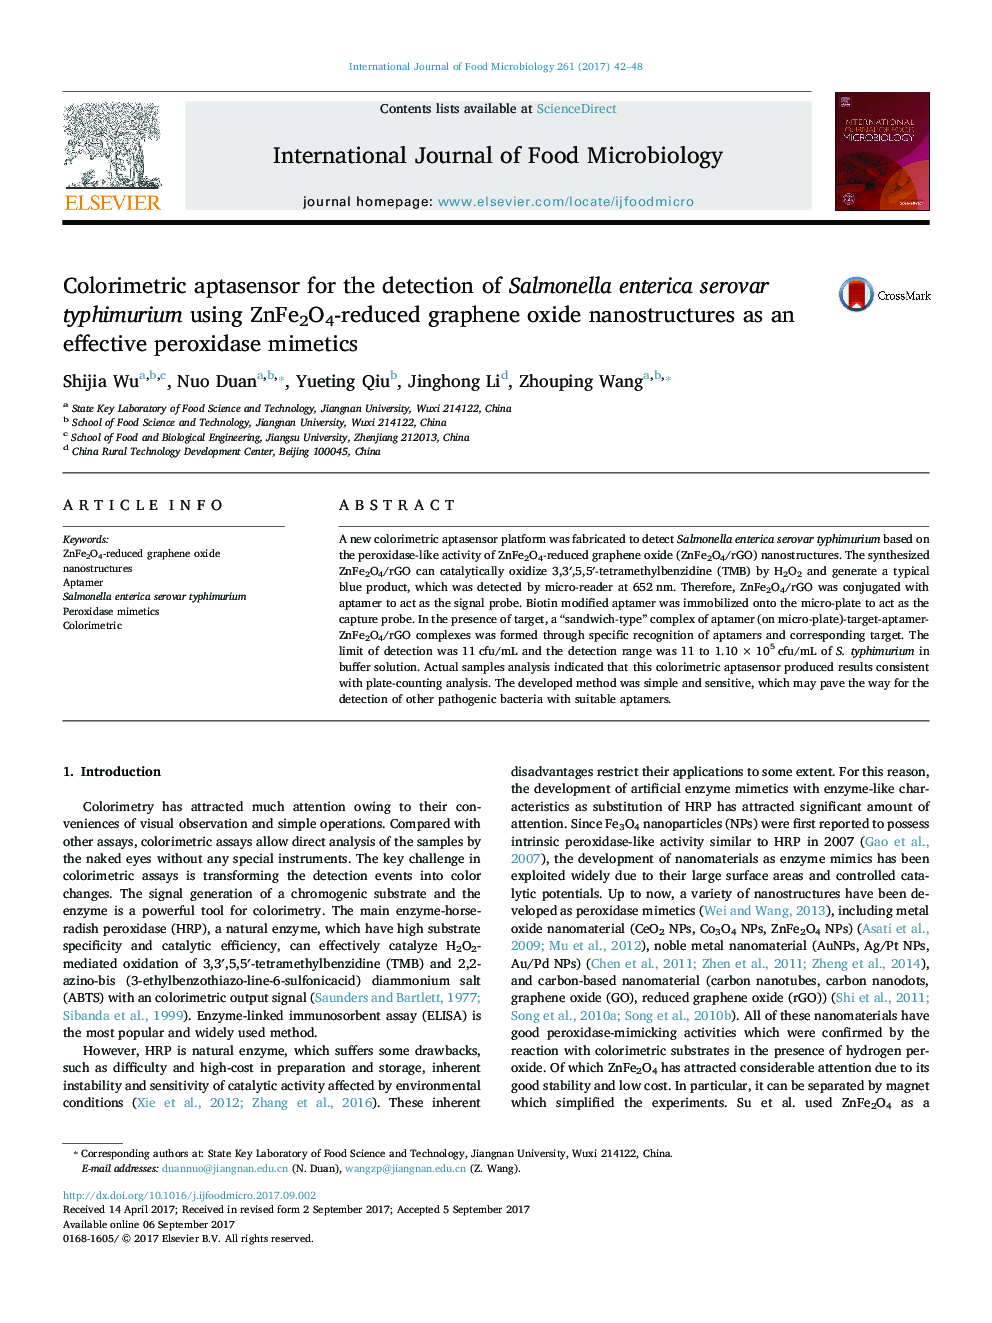 Colorimetric aptasensor for the detection of Salmonella enterica serovar typhimurium using ZnFe2O4-reduced graphene oxide nanostructures as an effective peroxidase mimetics